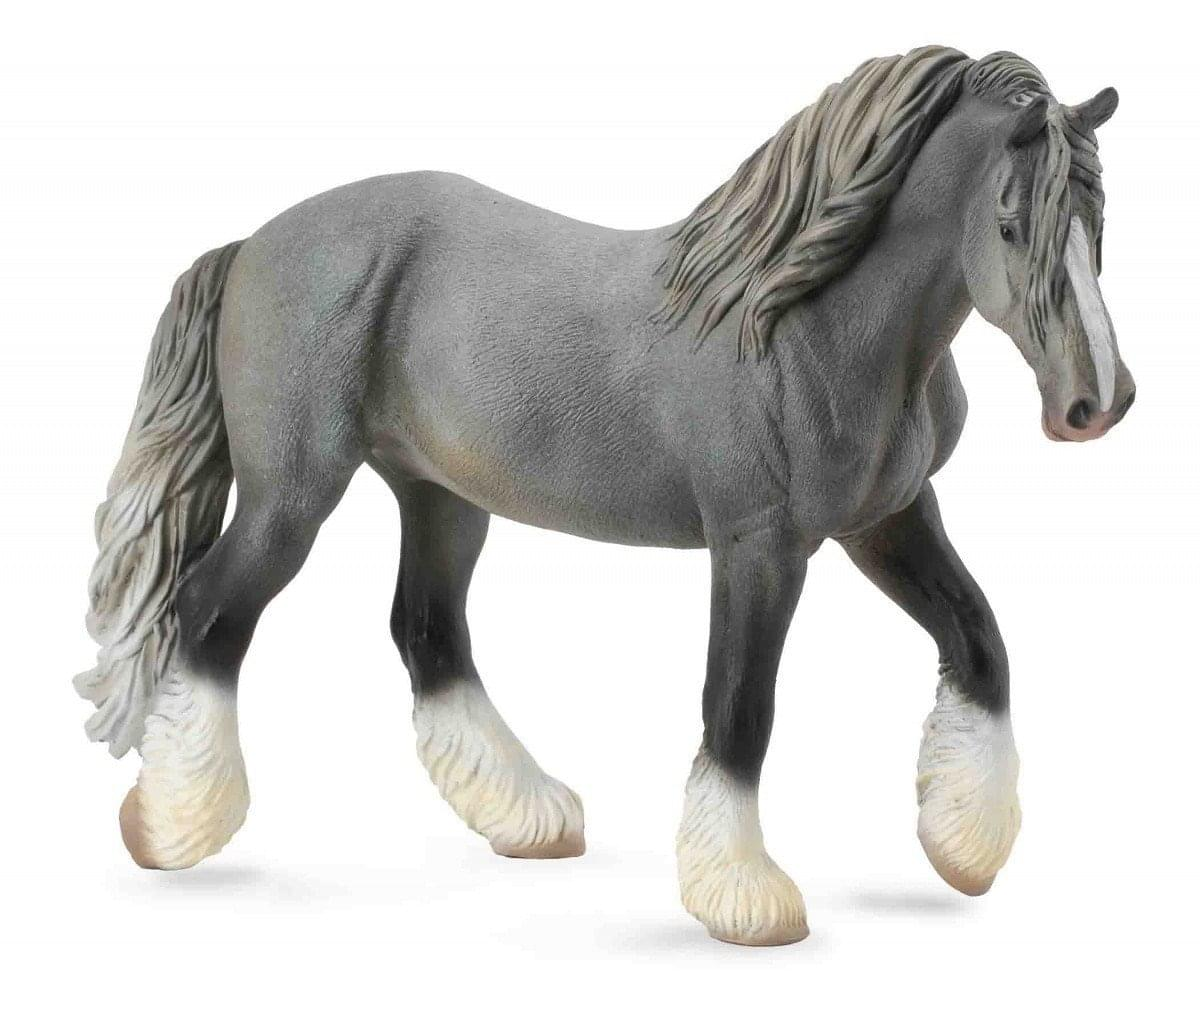 Clydesdale horse sculpture